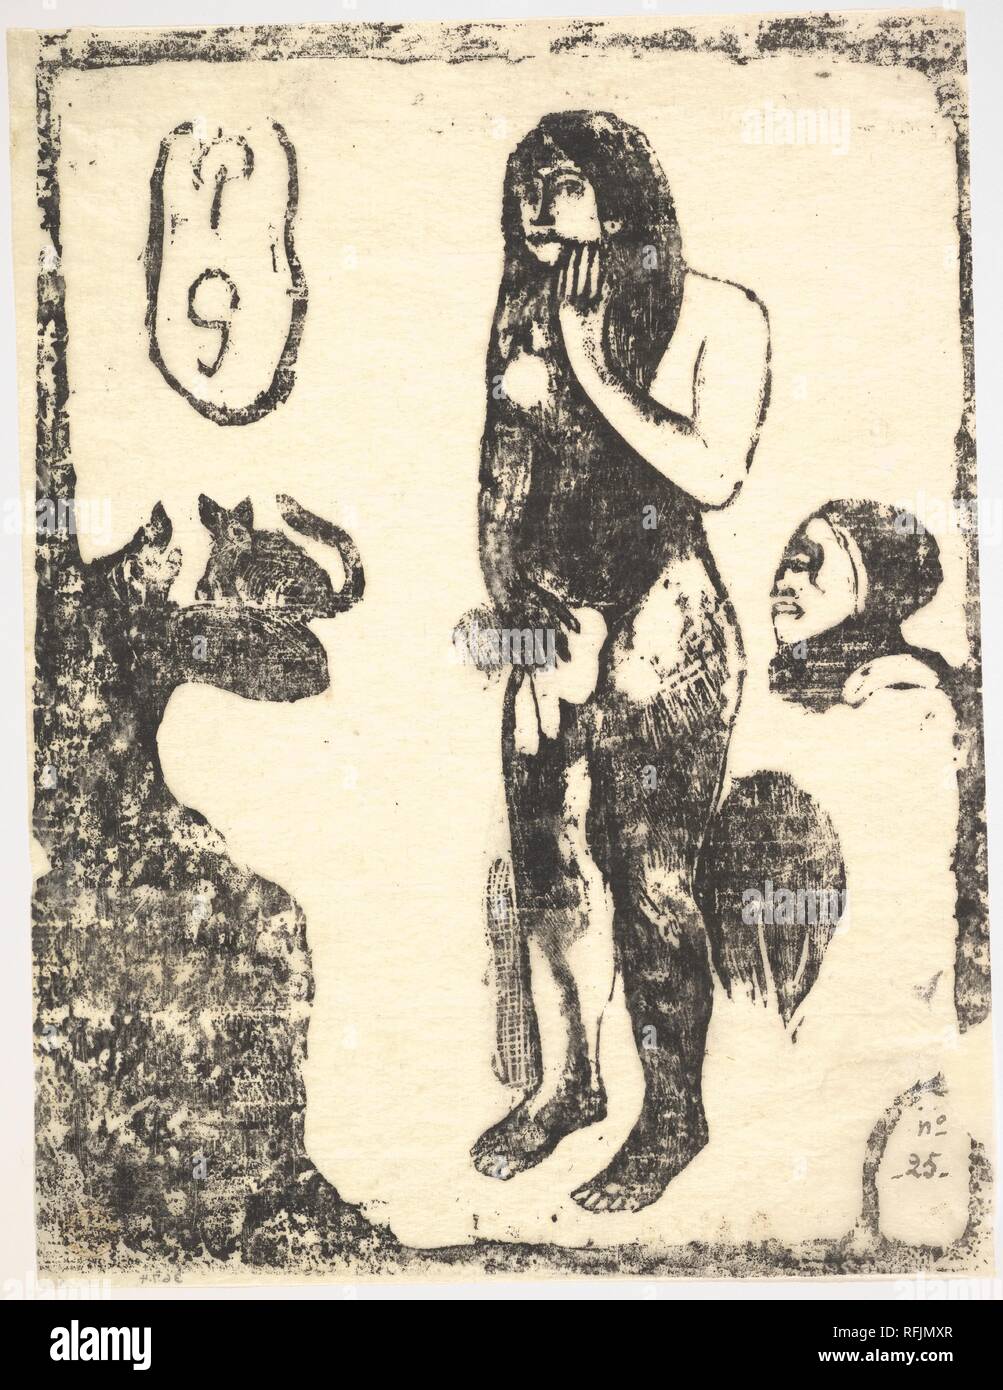 Eva. Artist: Paul Gauguin (Französisch, Paris 1848-1903 Atuona, Hiva Oa, Marquesas Inseln). Abmessungen: 11 x 8 1/4 in. zu Bild getrimmt. Datum: 1898-99. Museum: Metropolitan Museum of Art, New York, USA. Stockfoto